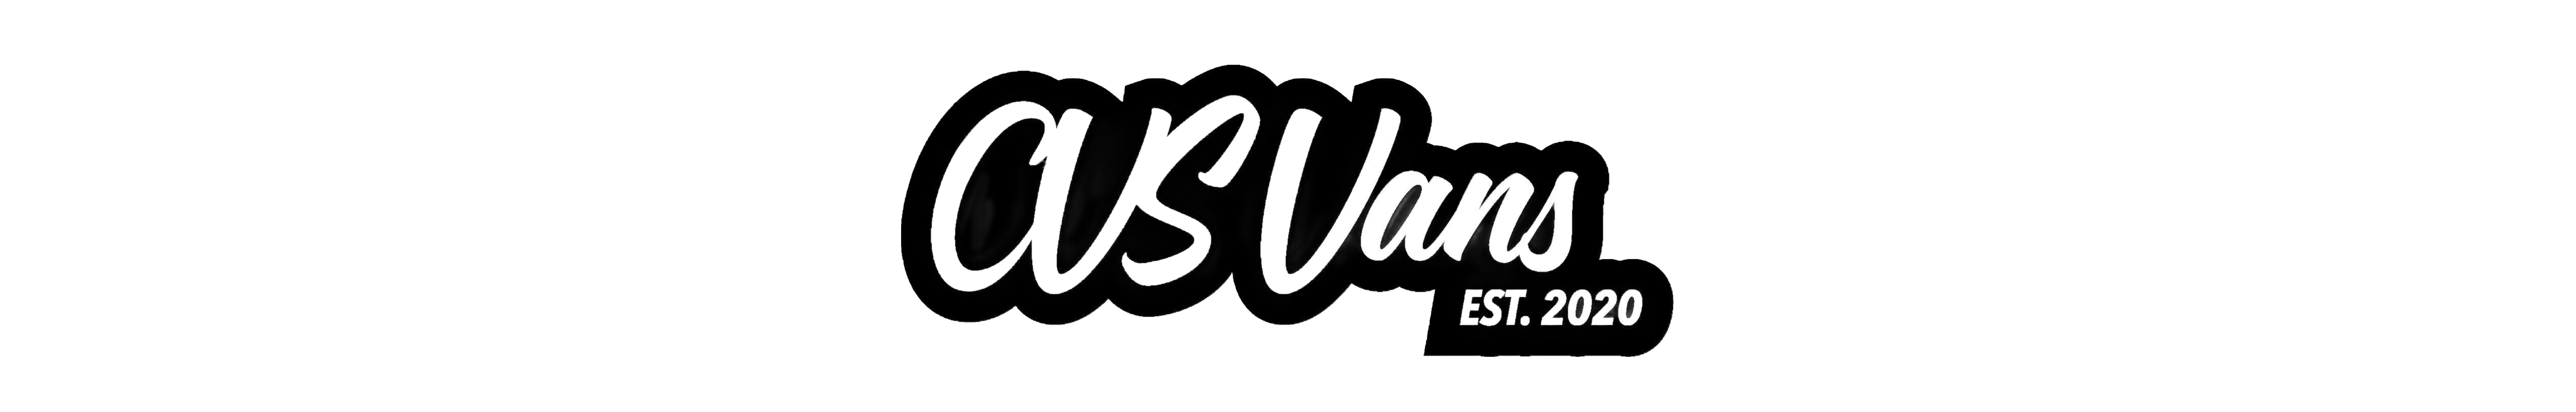 CVS Vans logo